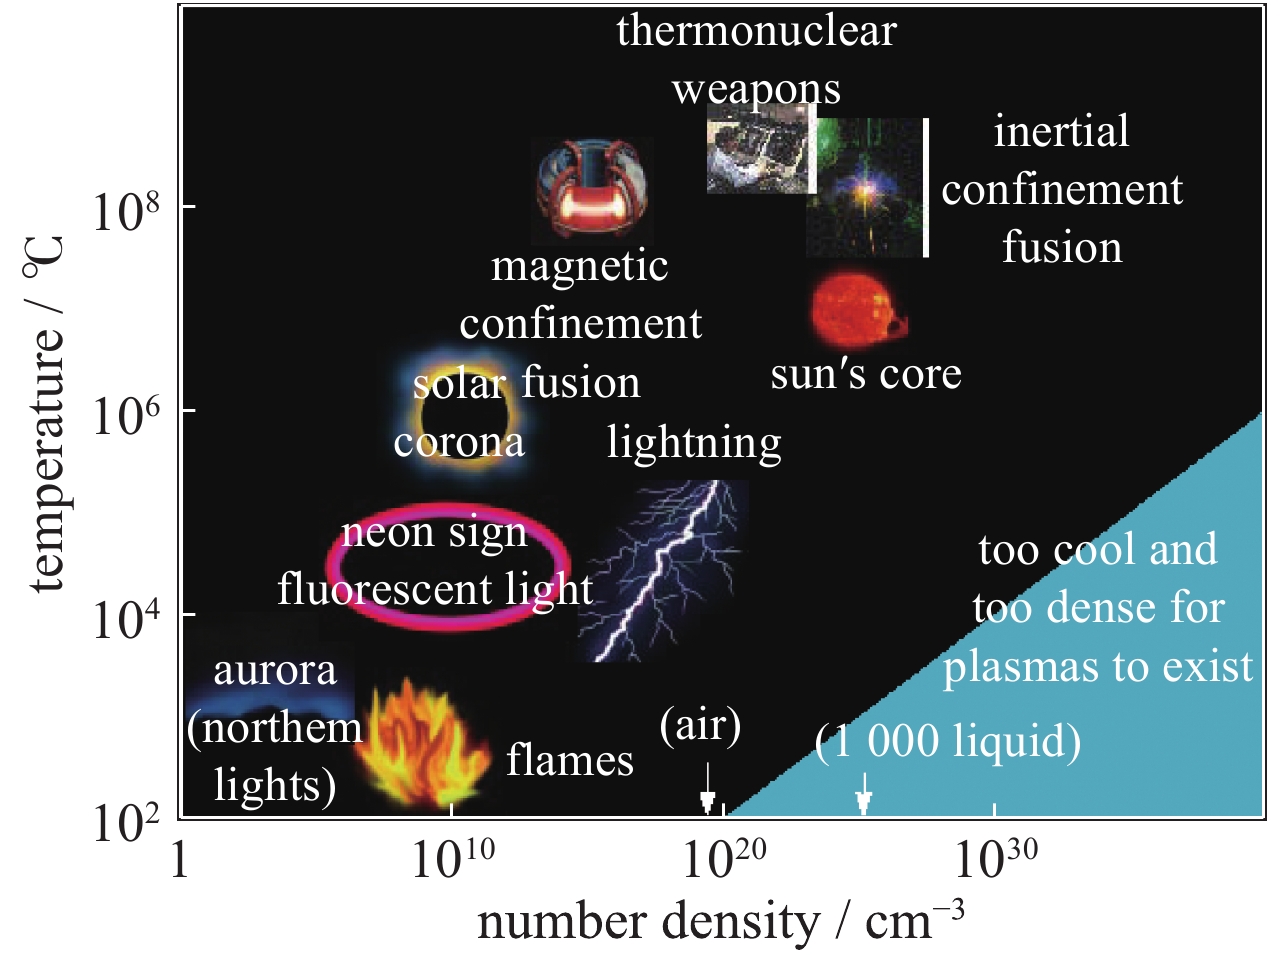 Temperature and density range of typical plasma